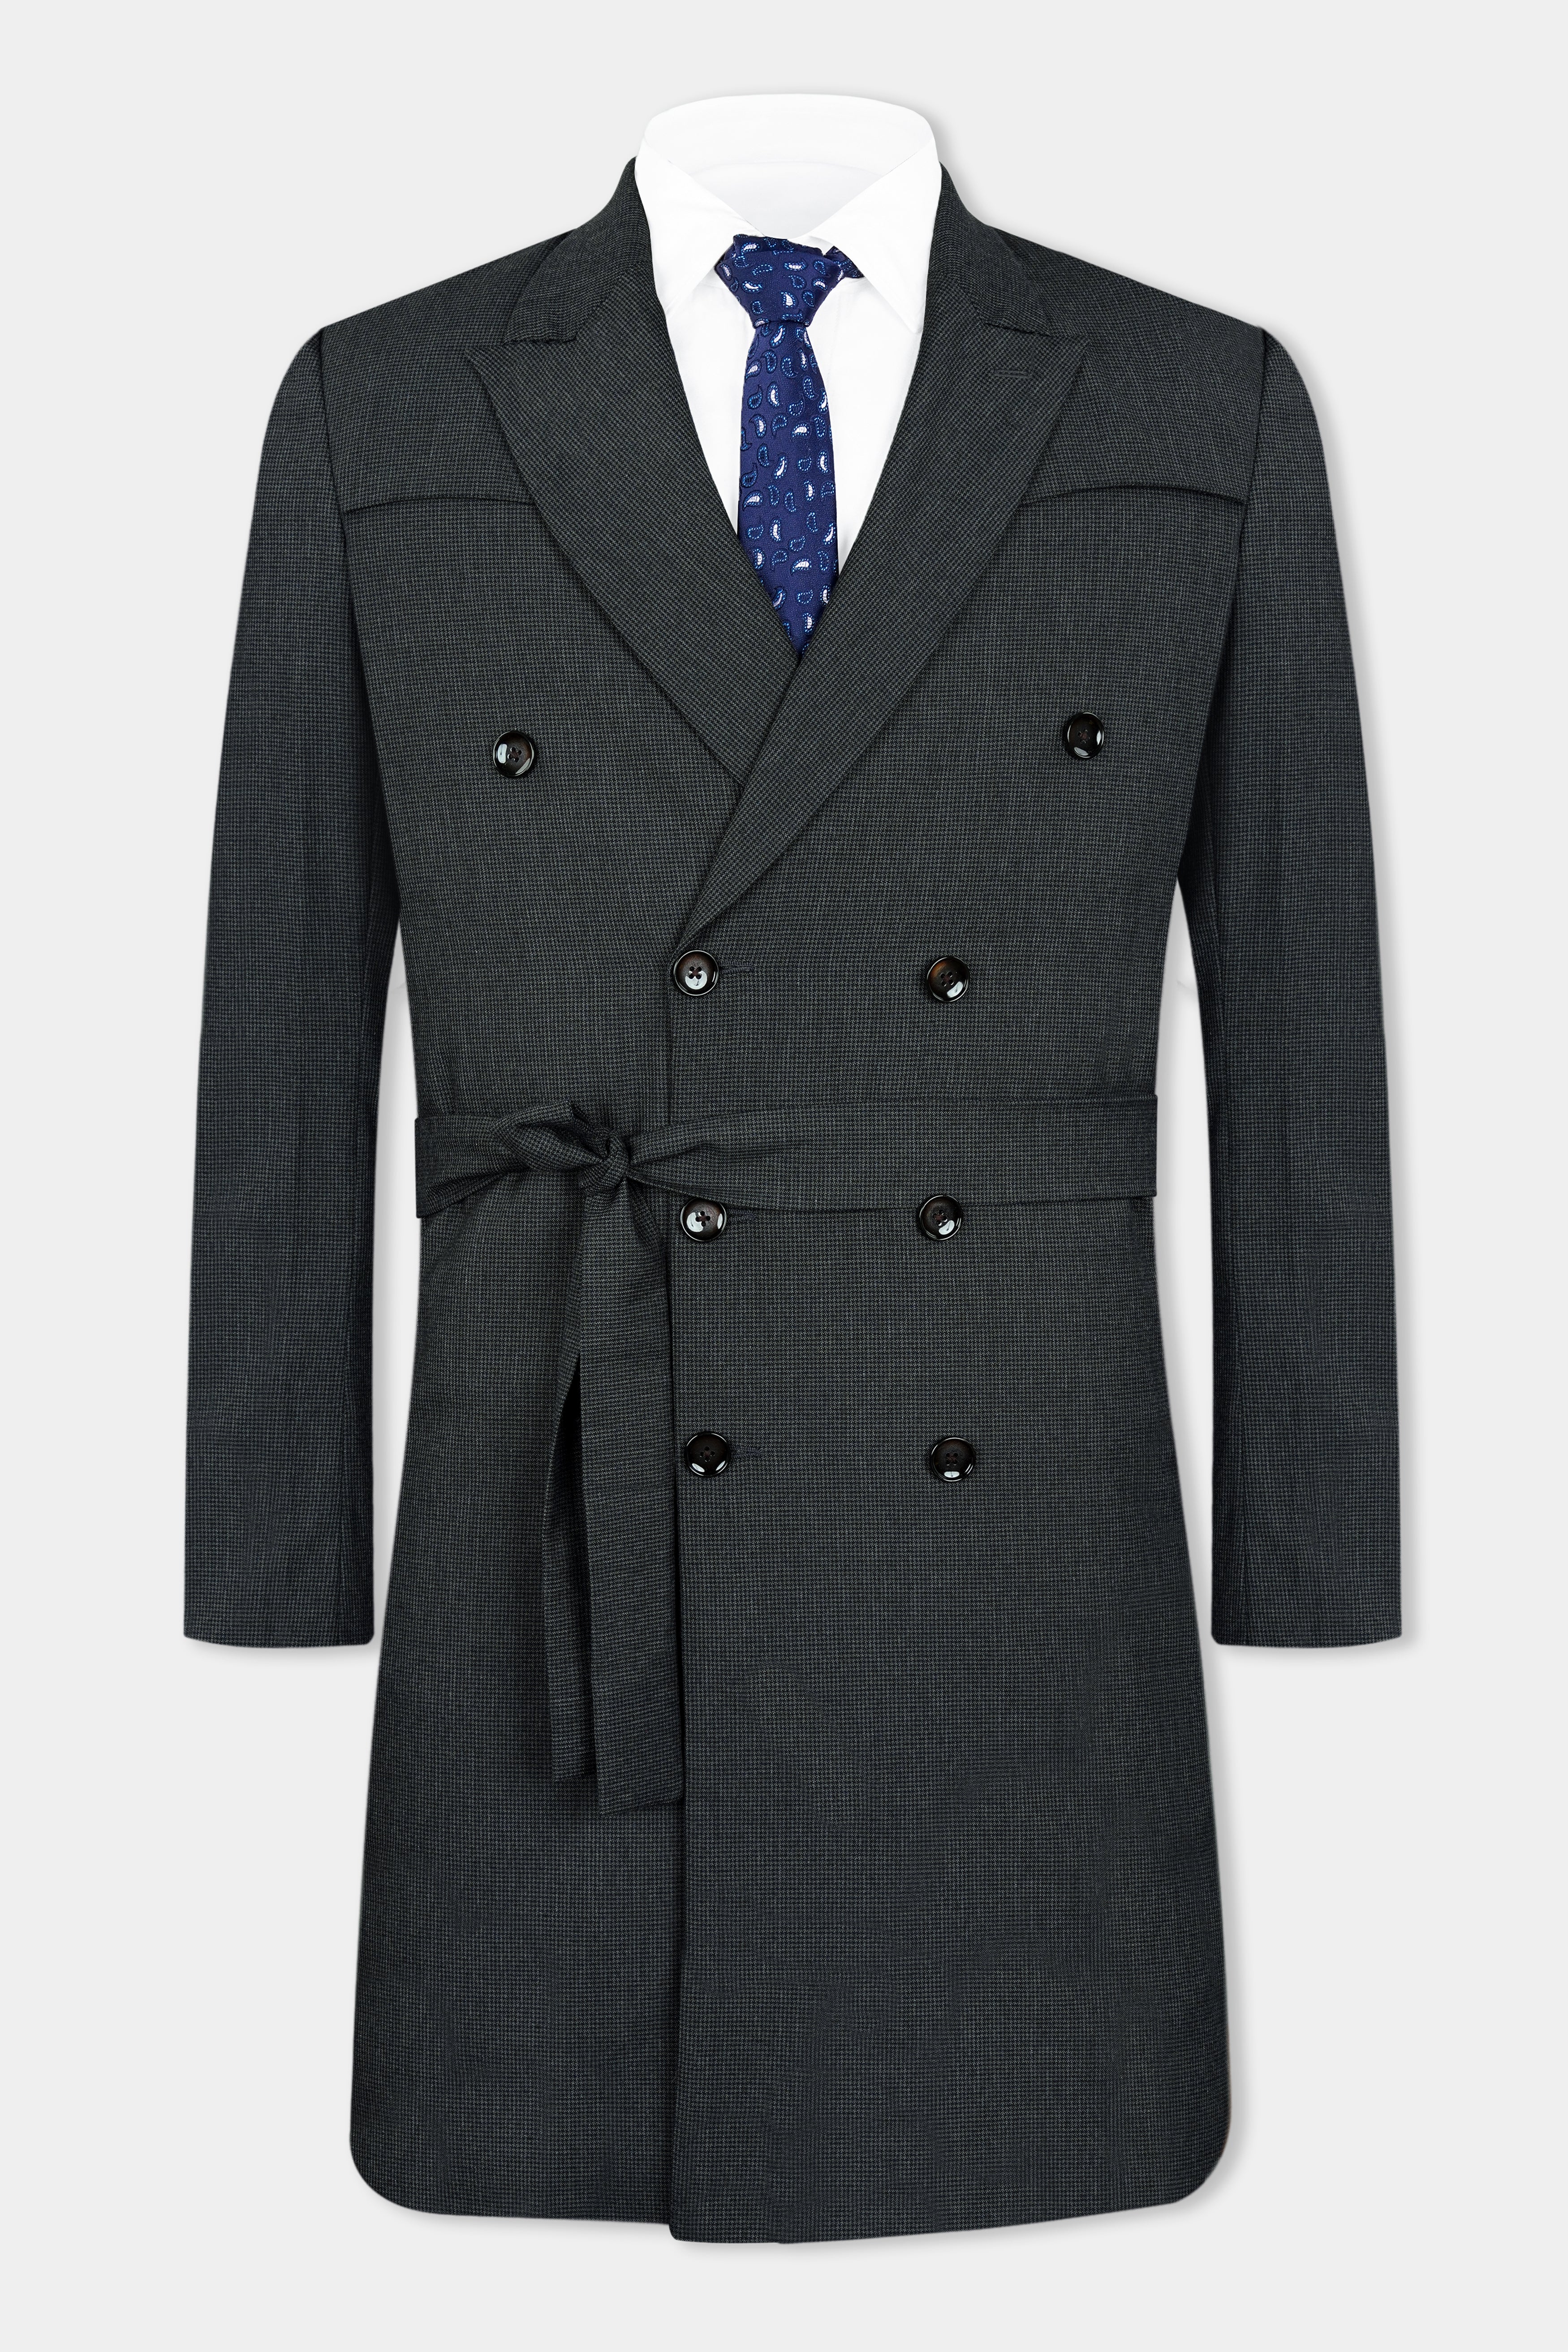 Men's Diagonal Zip Front Suit Jacket in Light Grey, Cardinal Red, Dark Navy  Blue, & Basic Black.